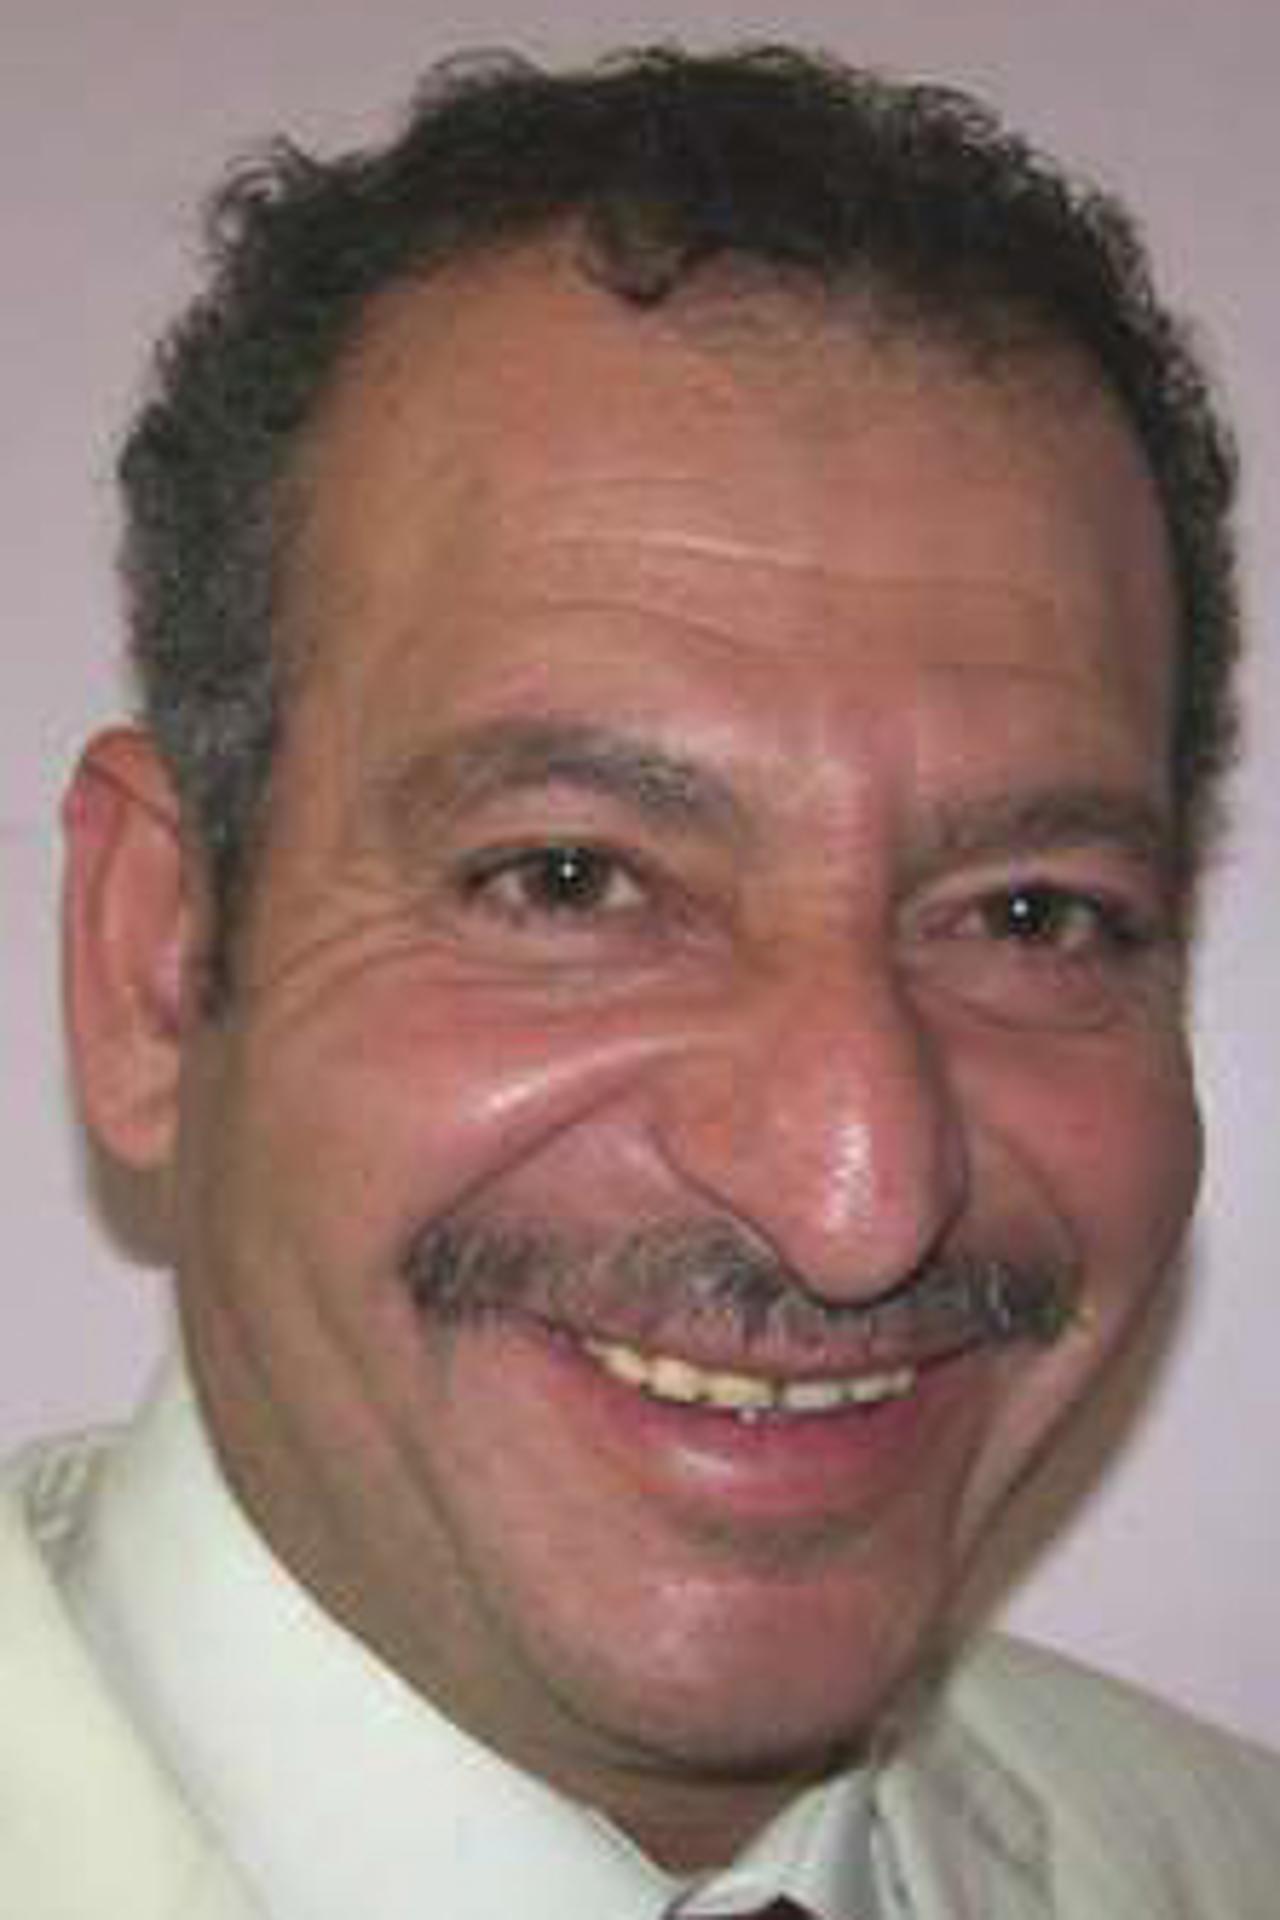 Jamal El Ali